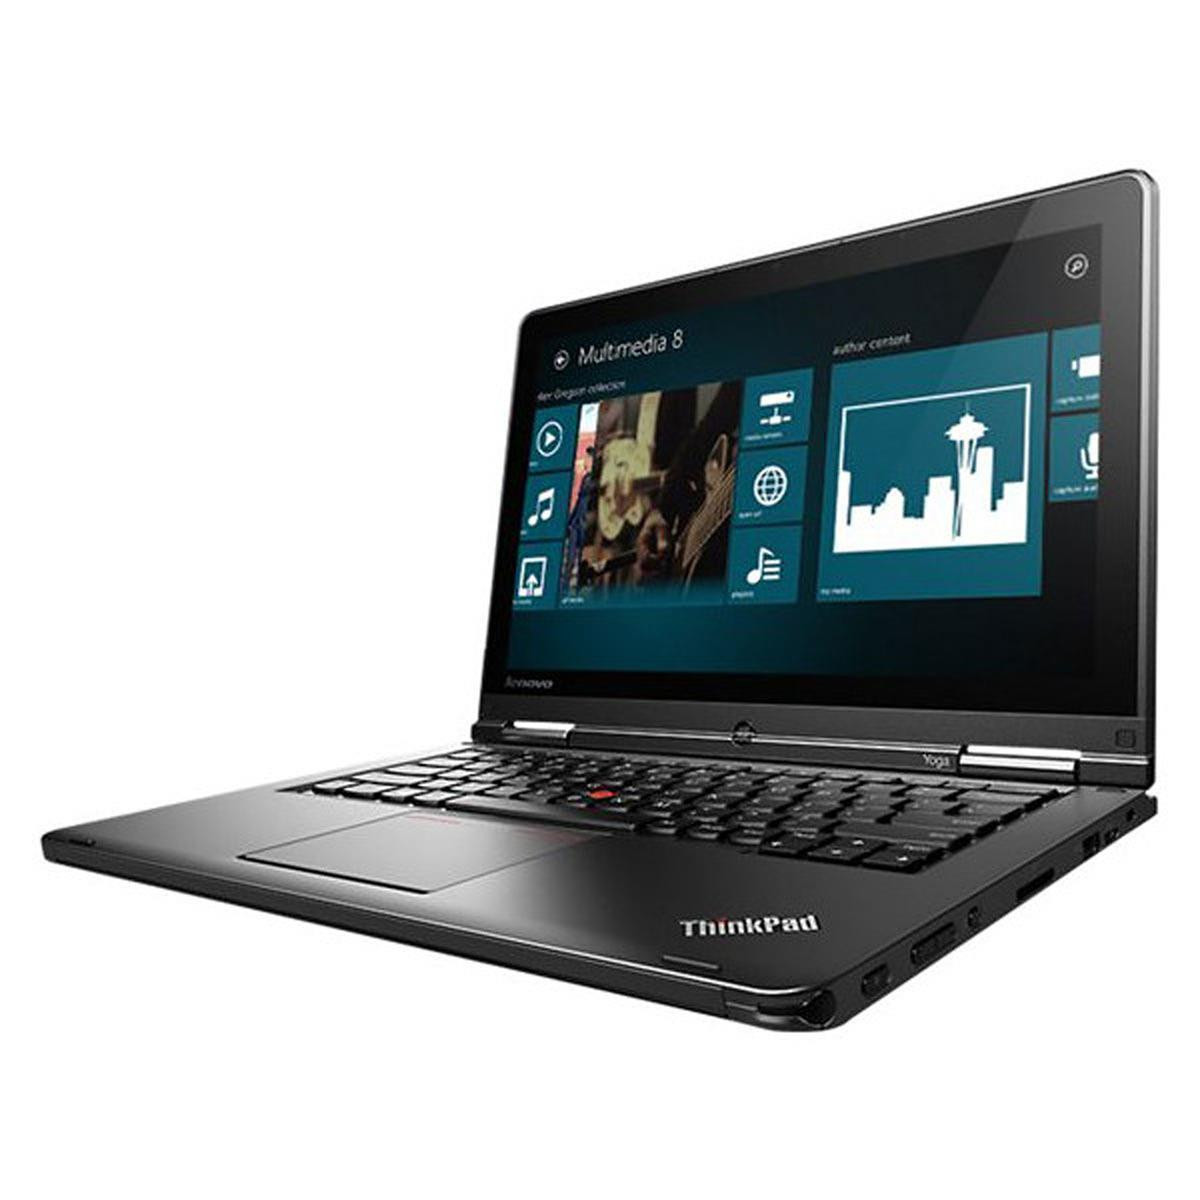 Lenovo ThinkPad S1 Yoga 12 Touch Core i5-5300U 2,3 GHz 8GB RAM 256GB SSD W10P